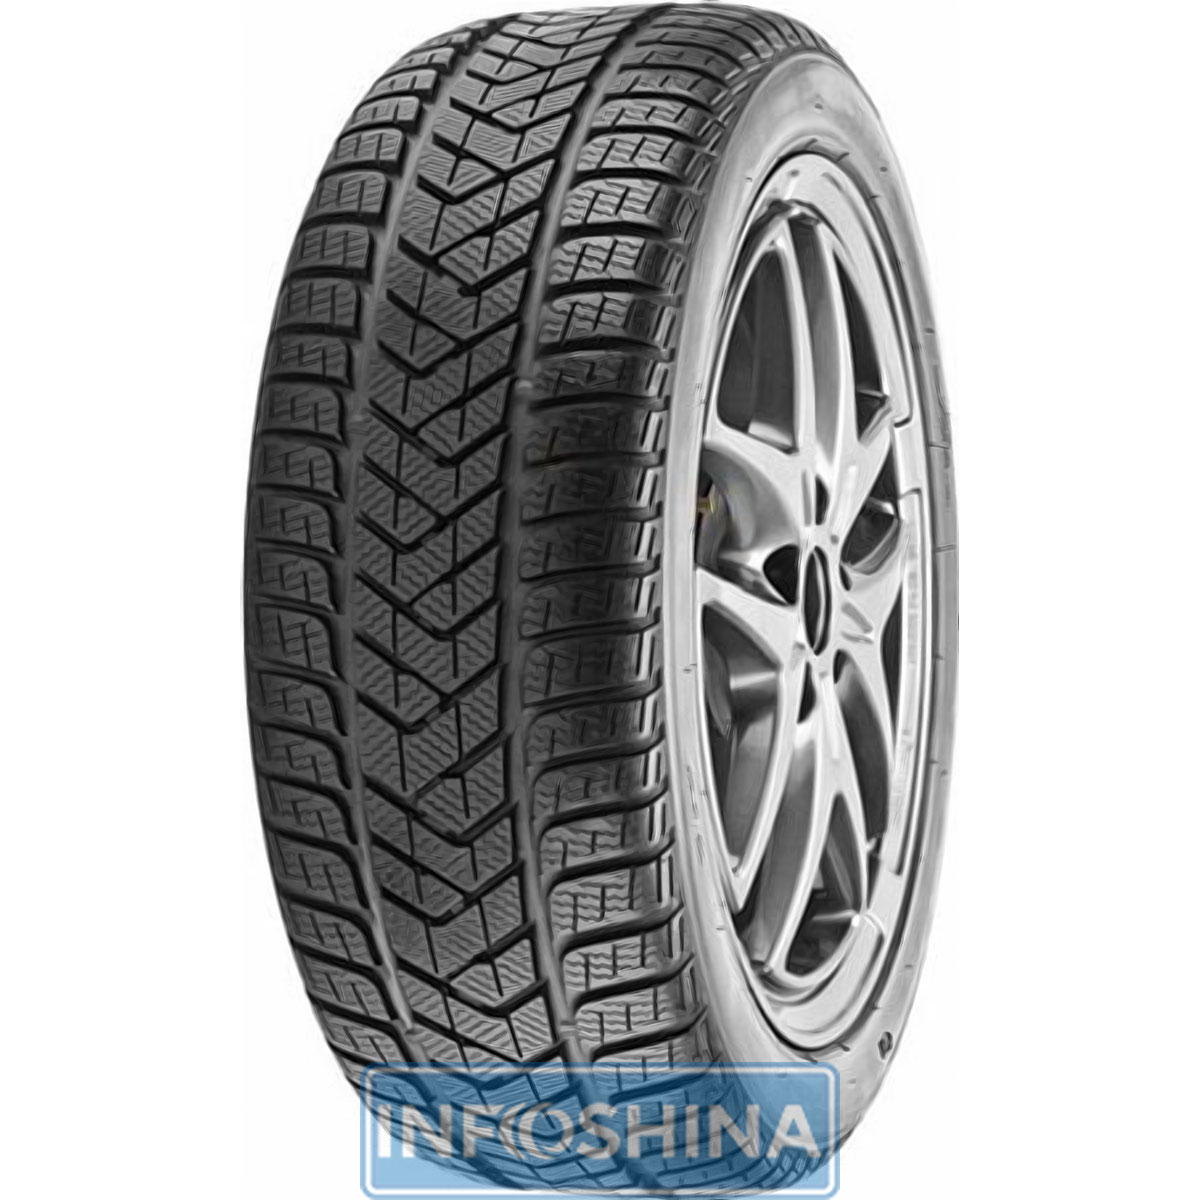 Купить шины Pirelli Winter 240 SottoZero 3 235/50 R18 101V